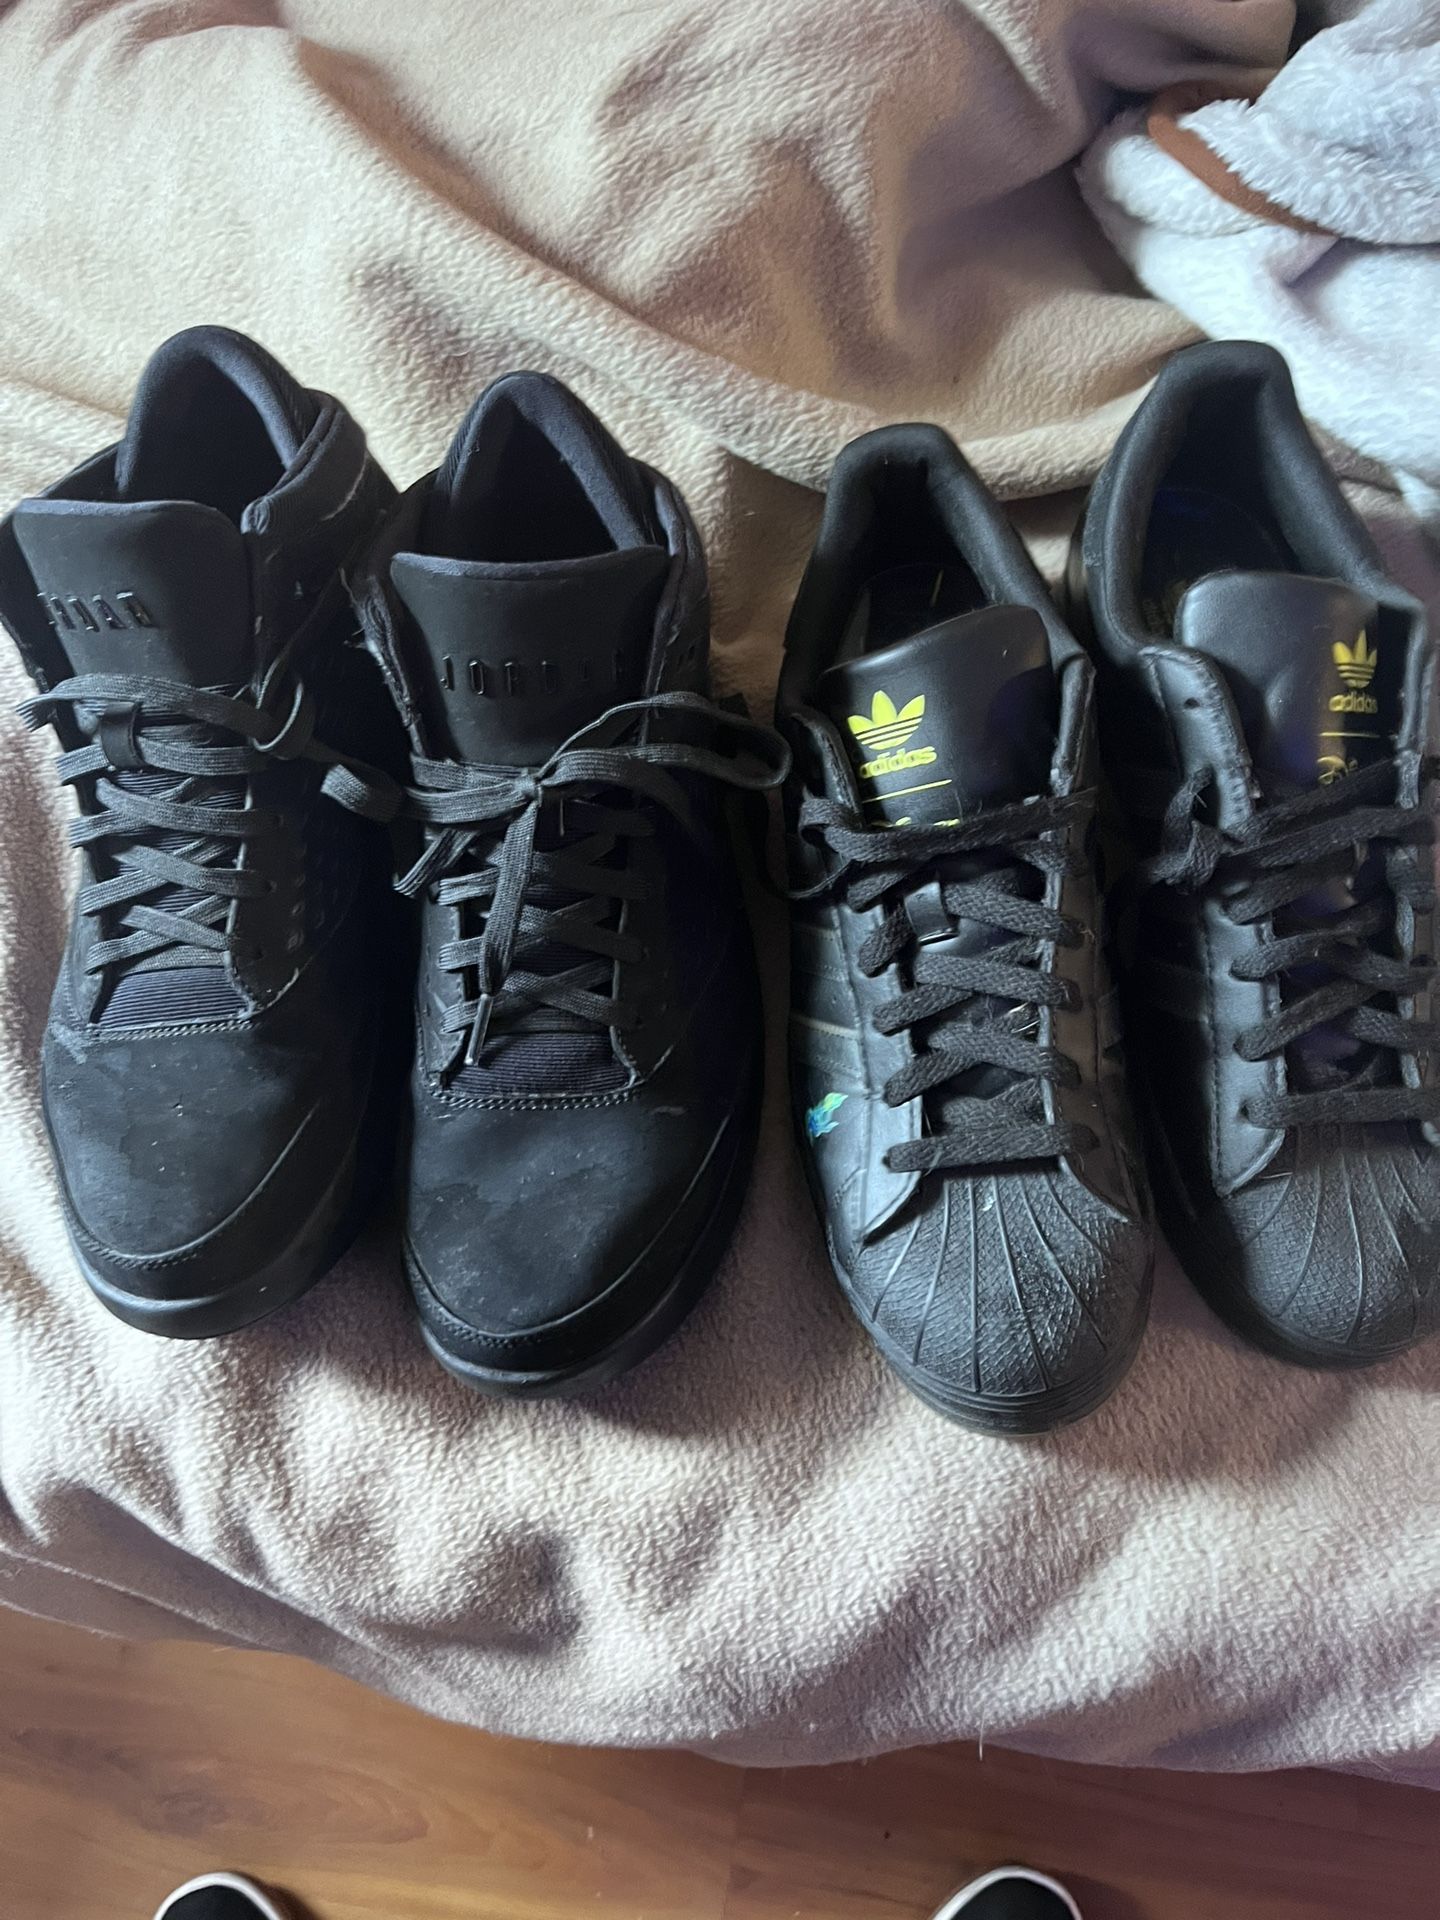 Jordan And Adidas Shoes Size 10